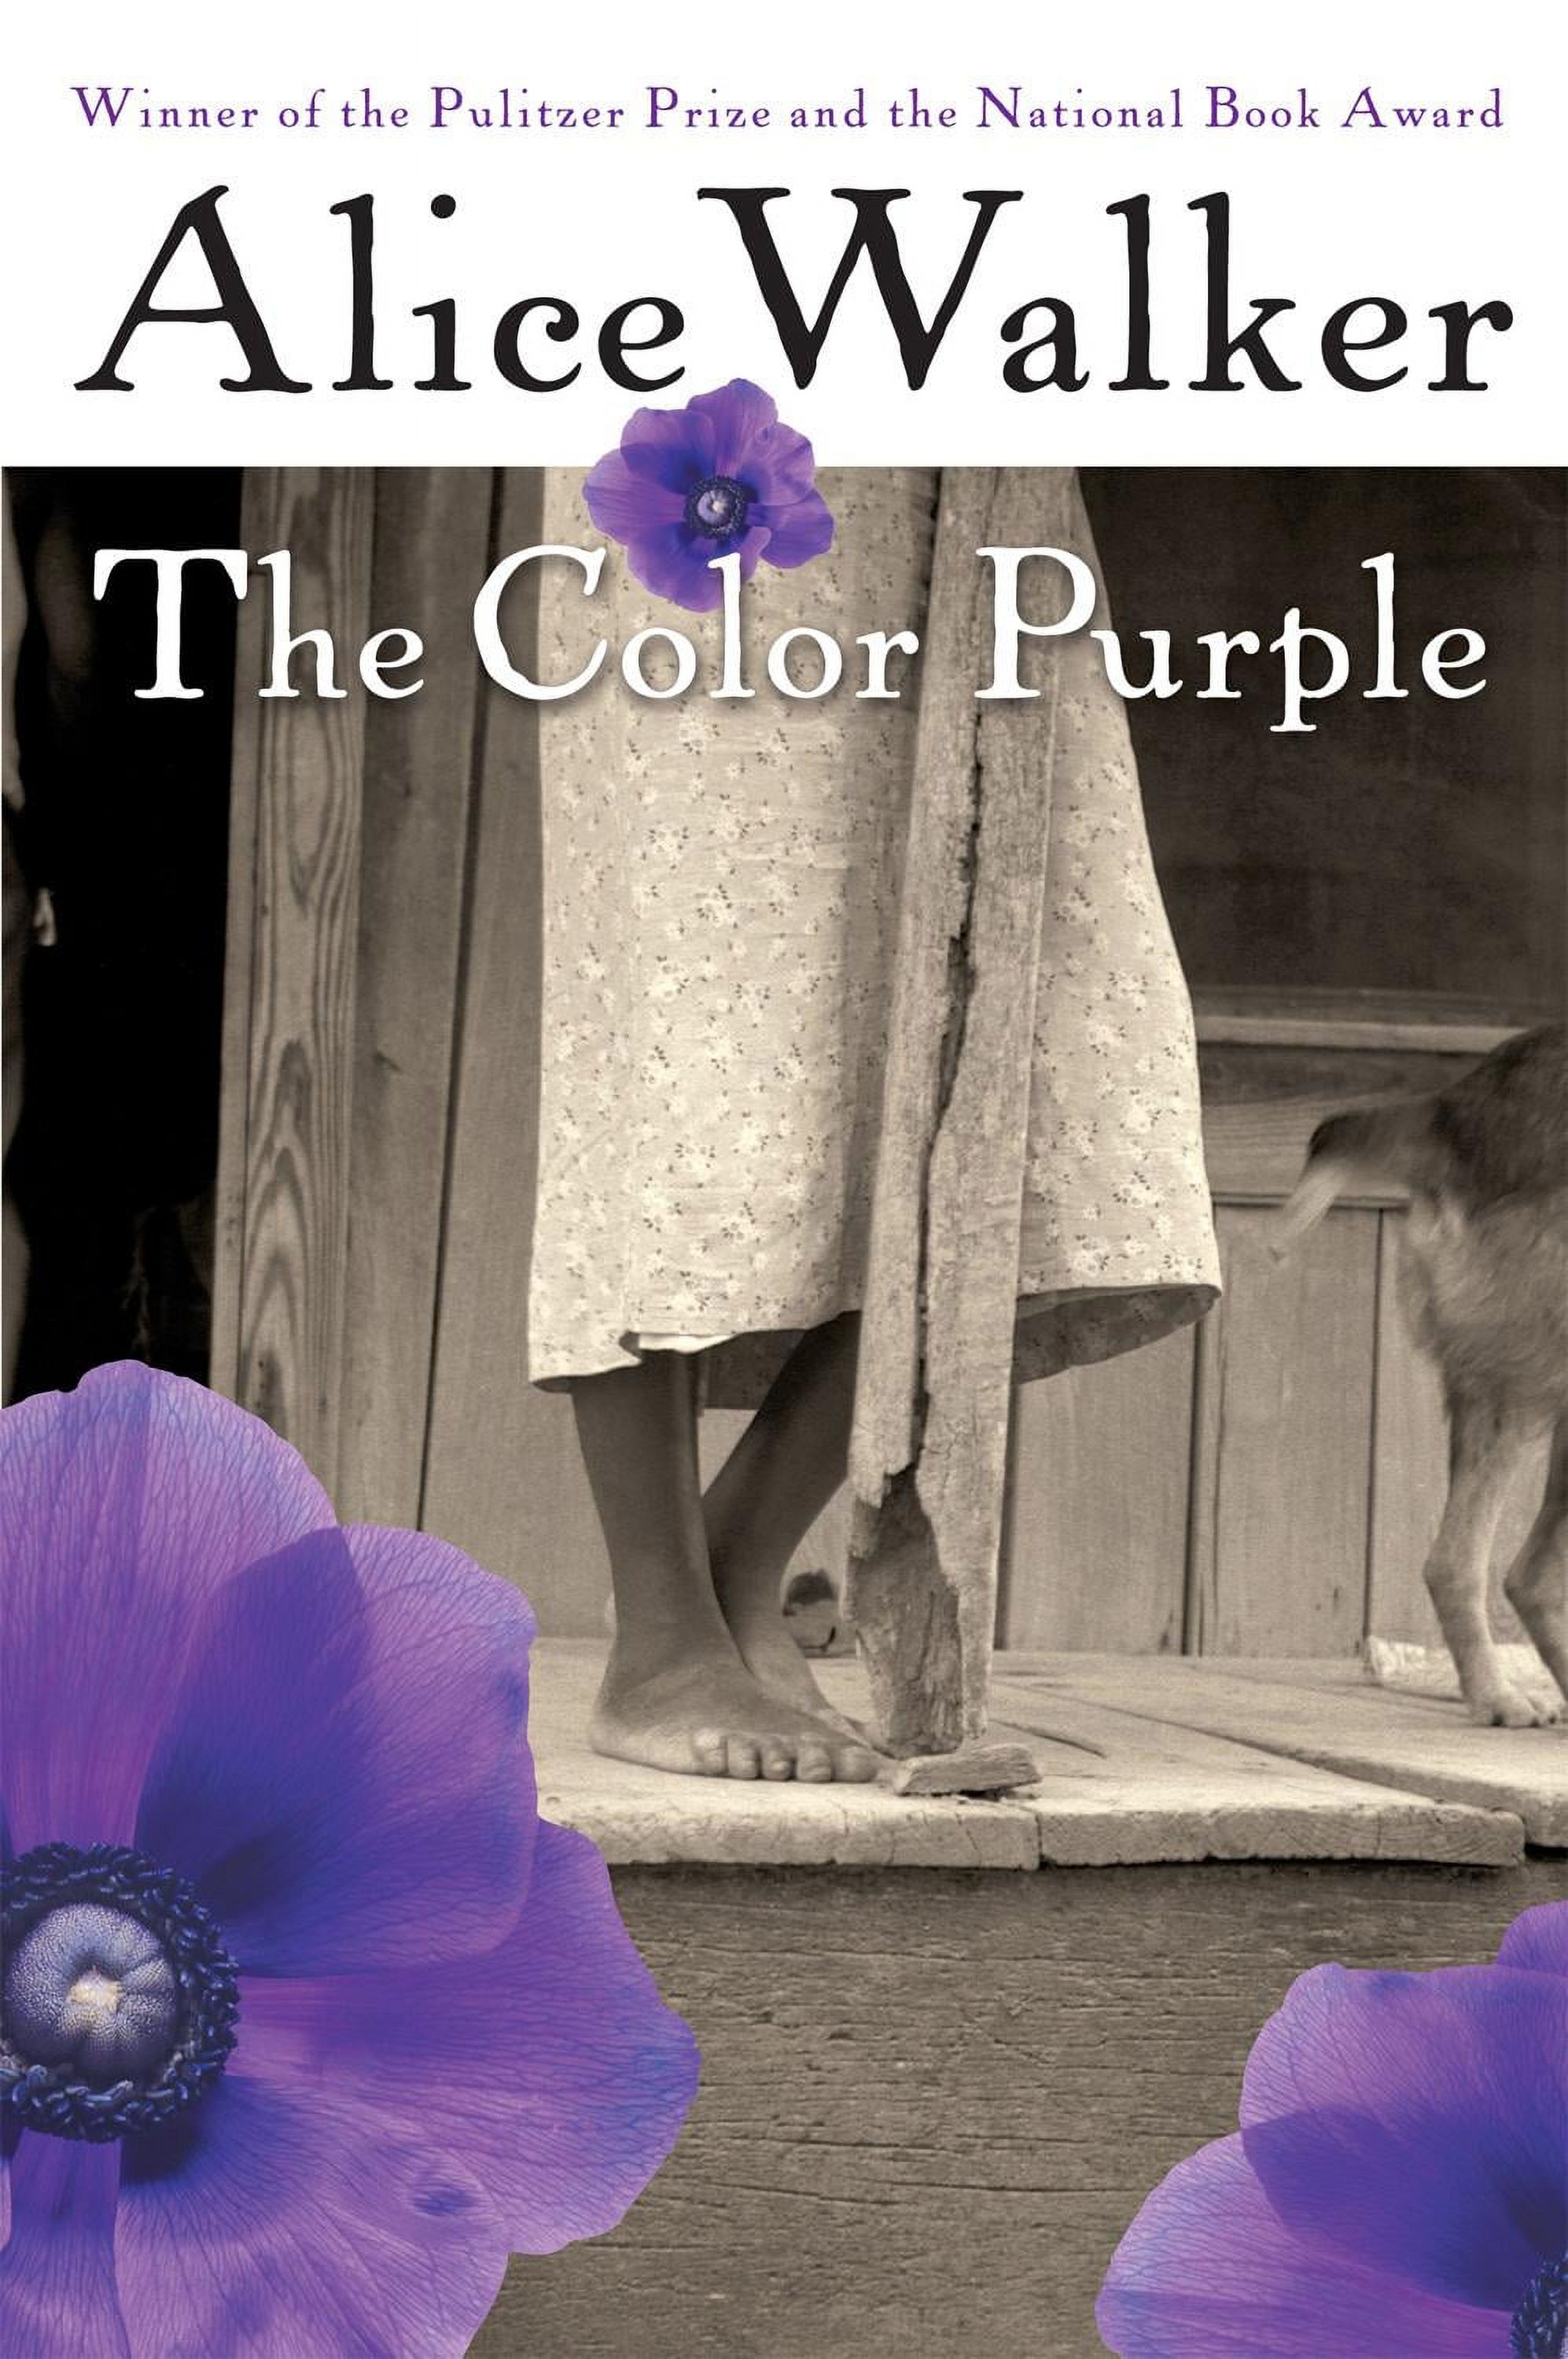 The Color Purple, Alice Walker - image 1 of 2